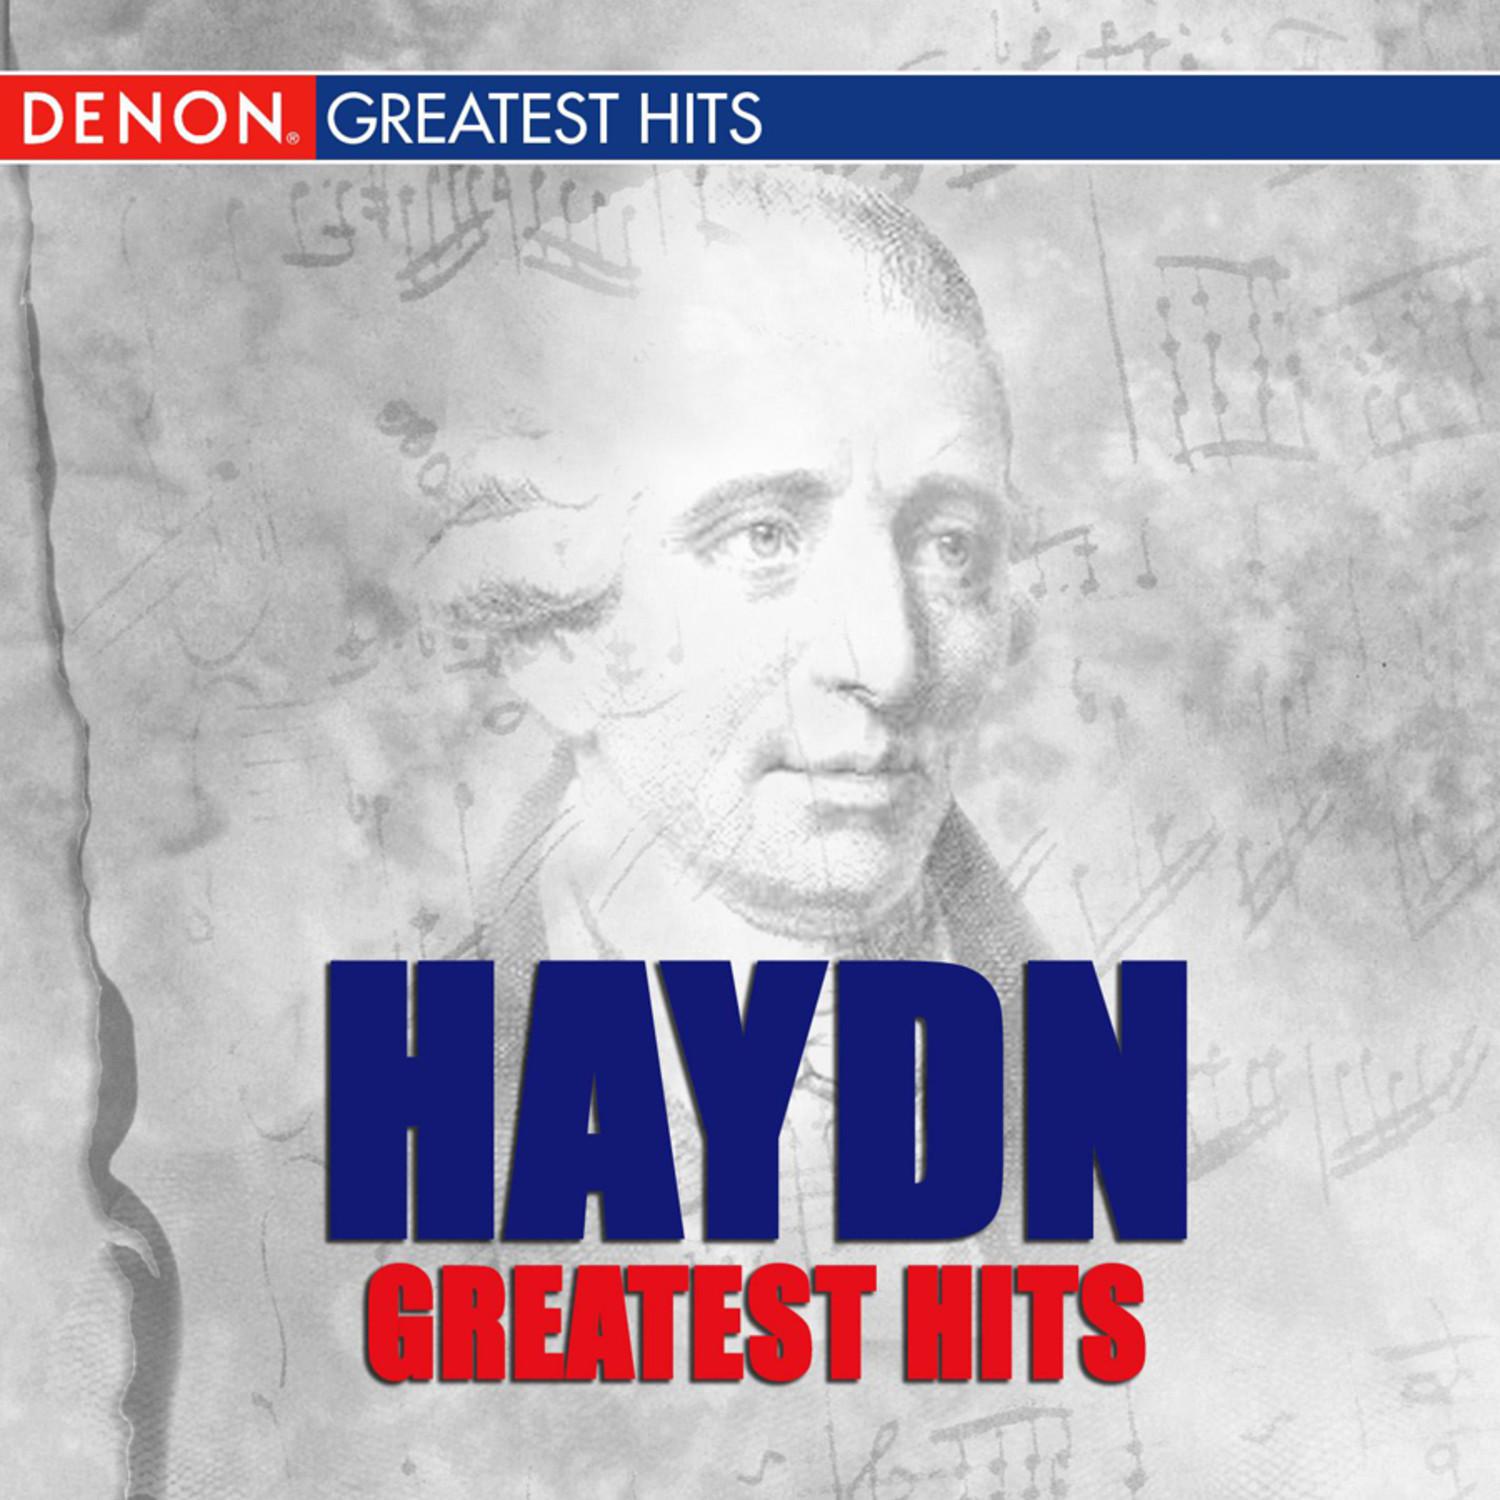 Haydn Greatest Hits